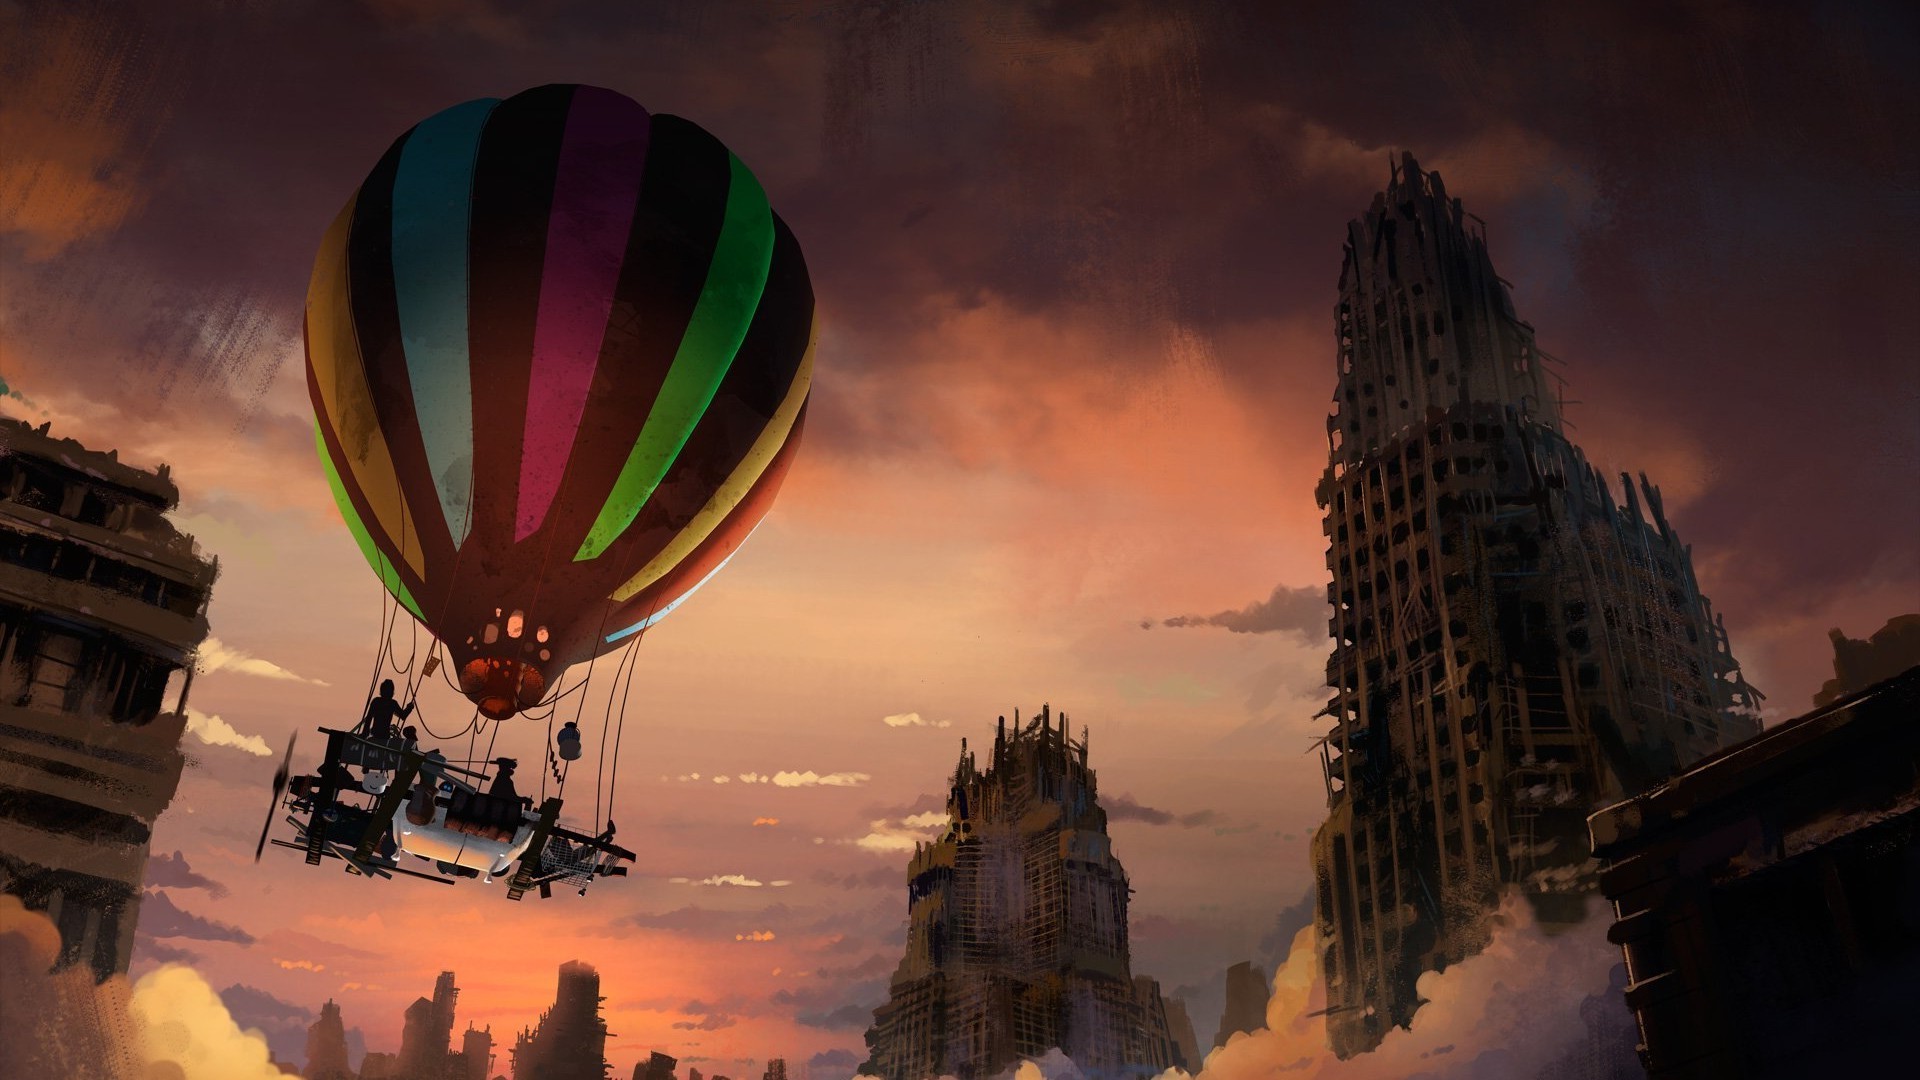 artwork, Fantasy Art, Apocalyptic, Hot Air Balloons, City Wallpaper